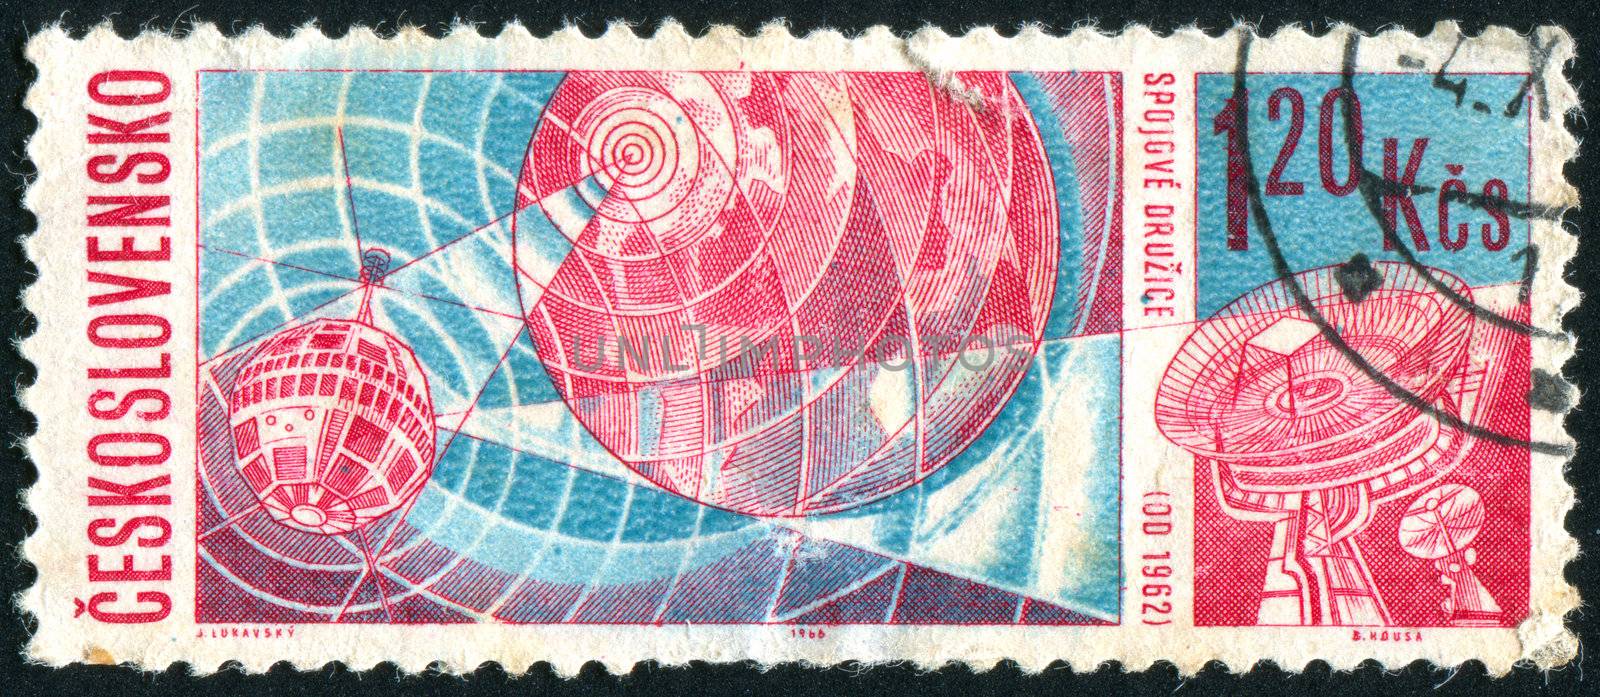 CZECHOSLOVAKIA - CIRCA 1966: stamp printed by Czechoslovakia, shows Telstar over Earth & receiving station, circa 1966